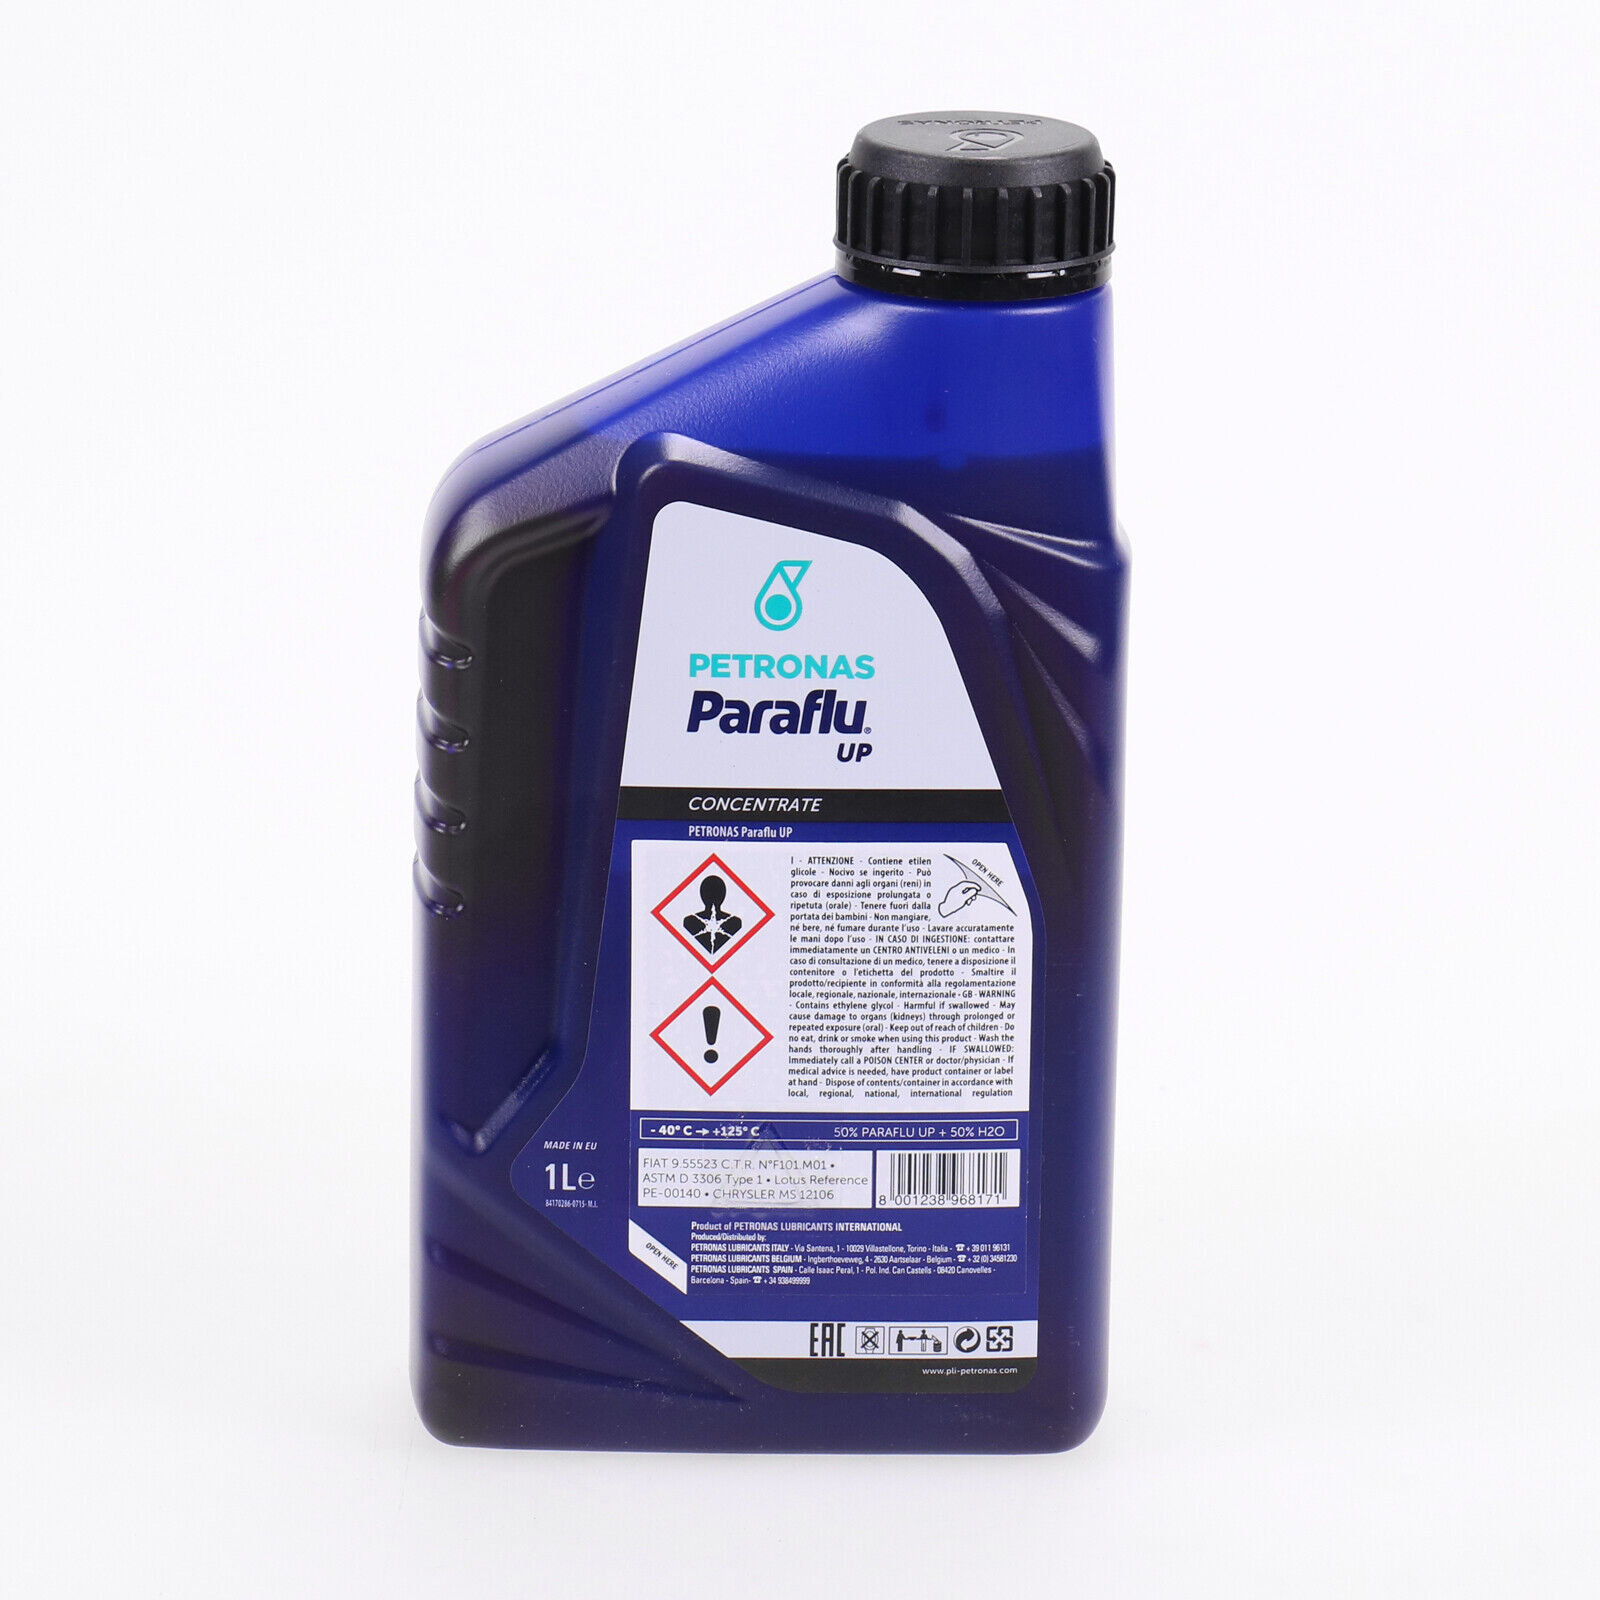 Petronas Paraflu UP – – Rs1Auto